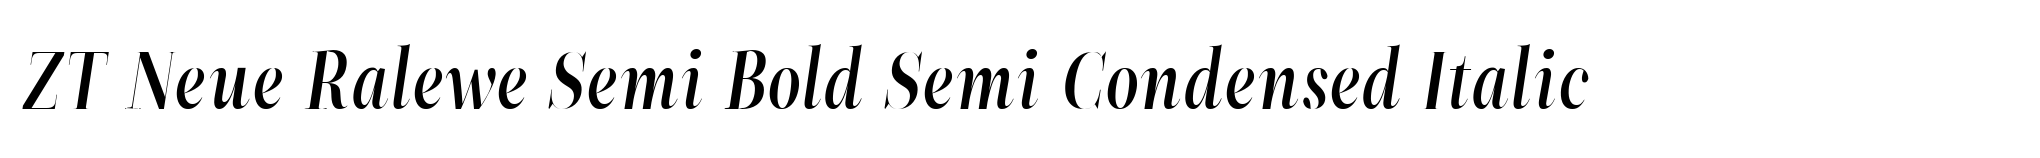 ZT Neue Ralewe Semi Bold Semi Condensed Italic image